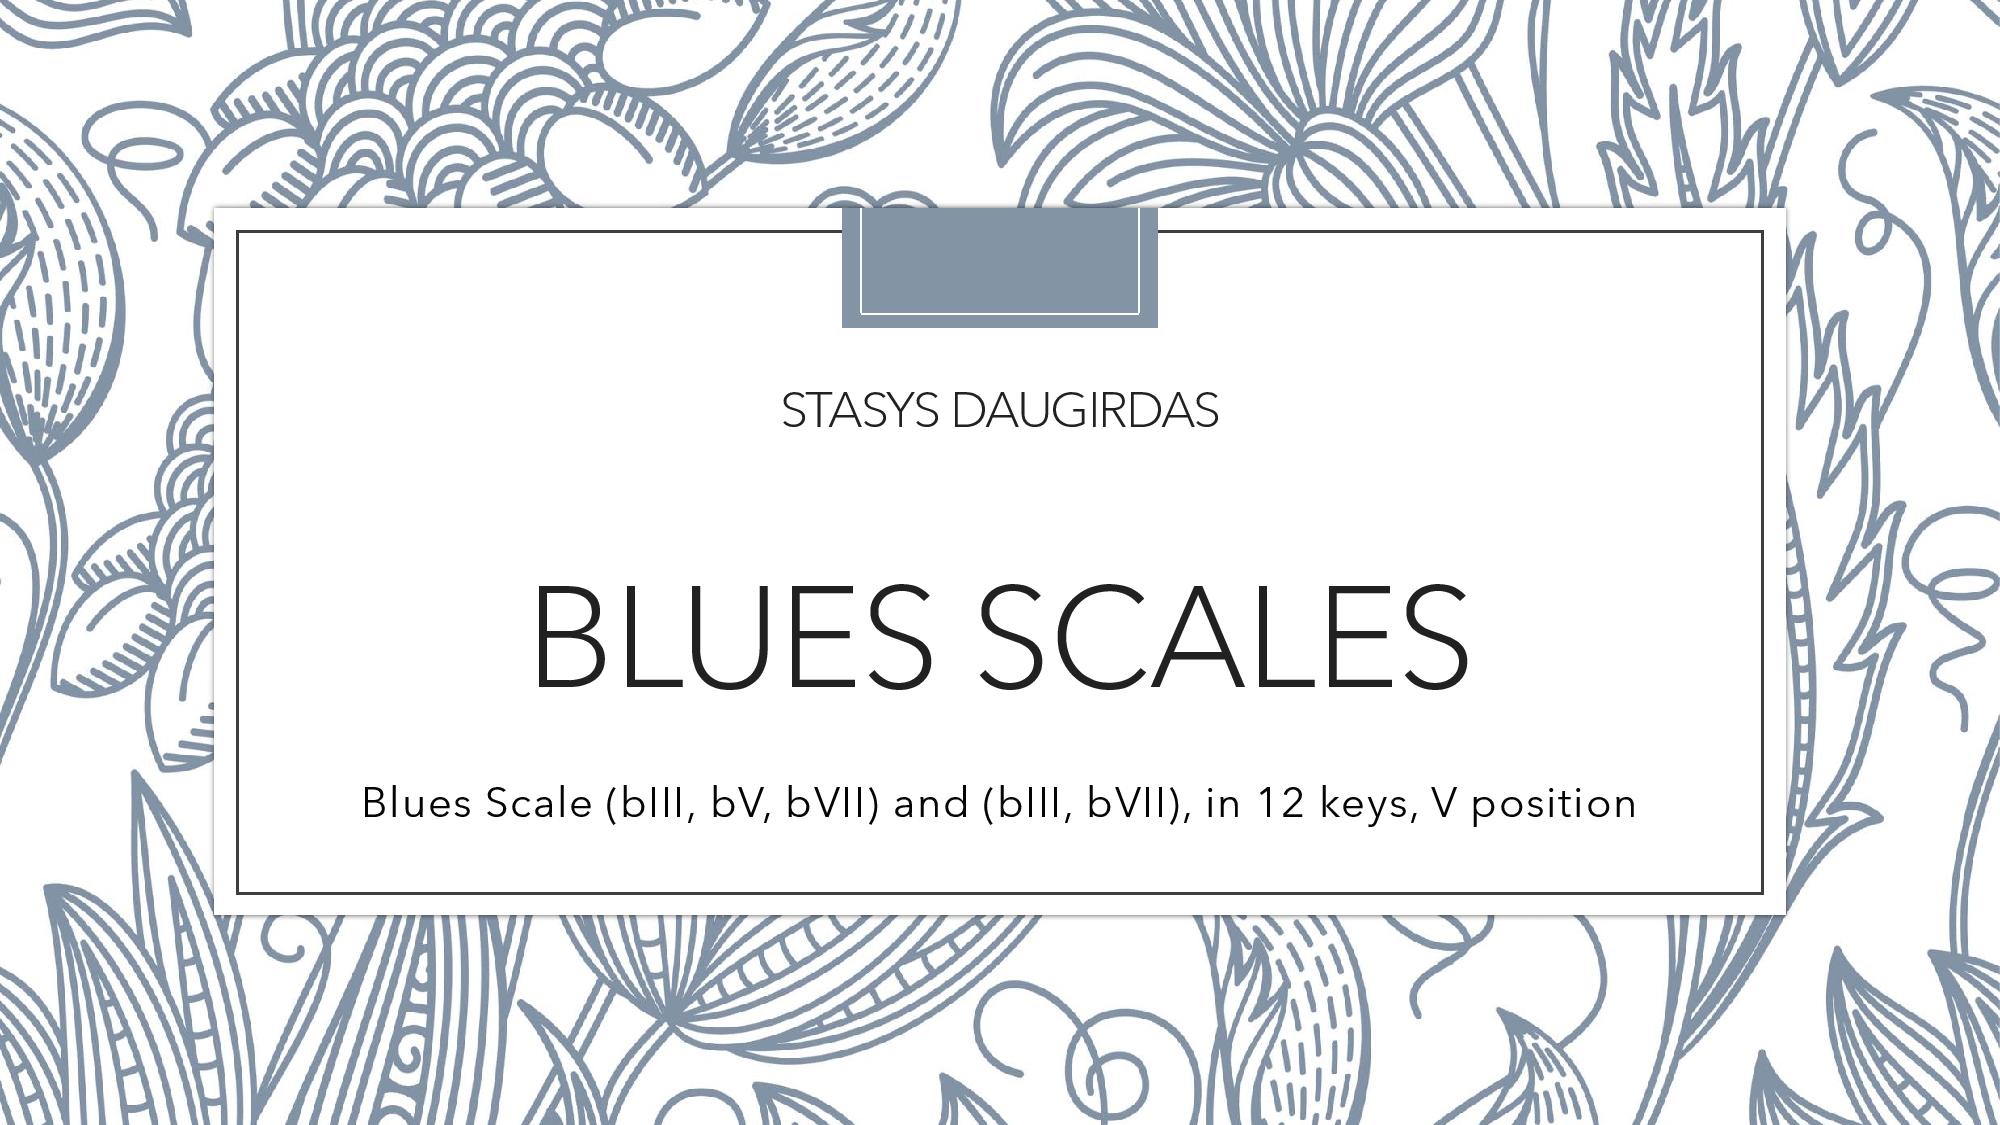 blues scales virselis page 001